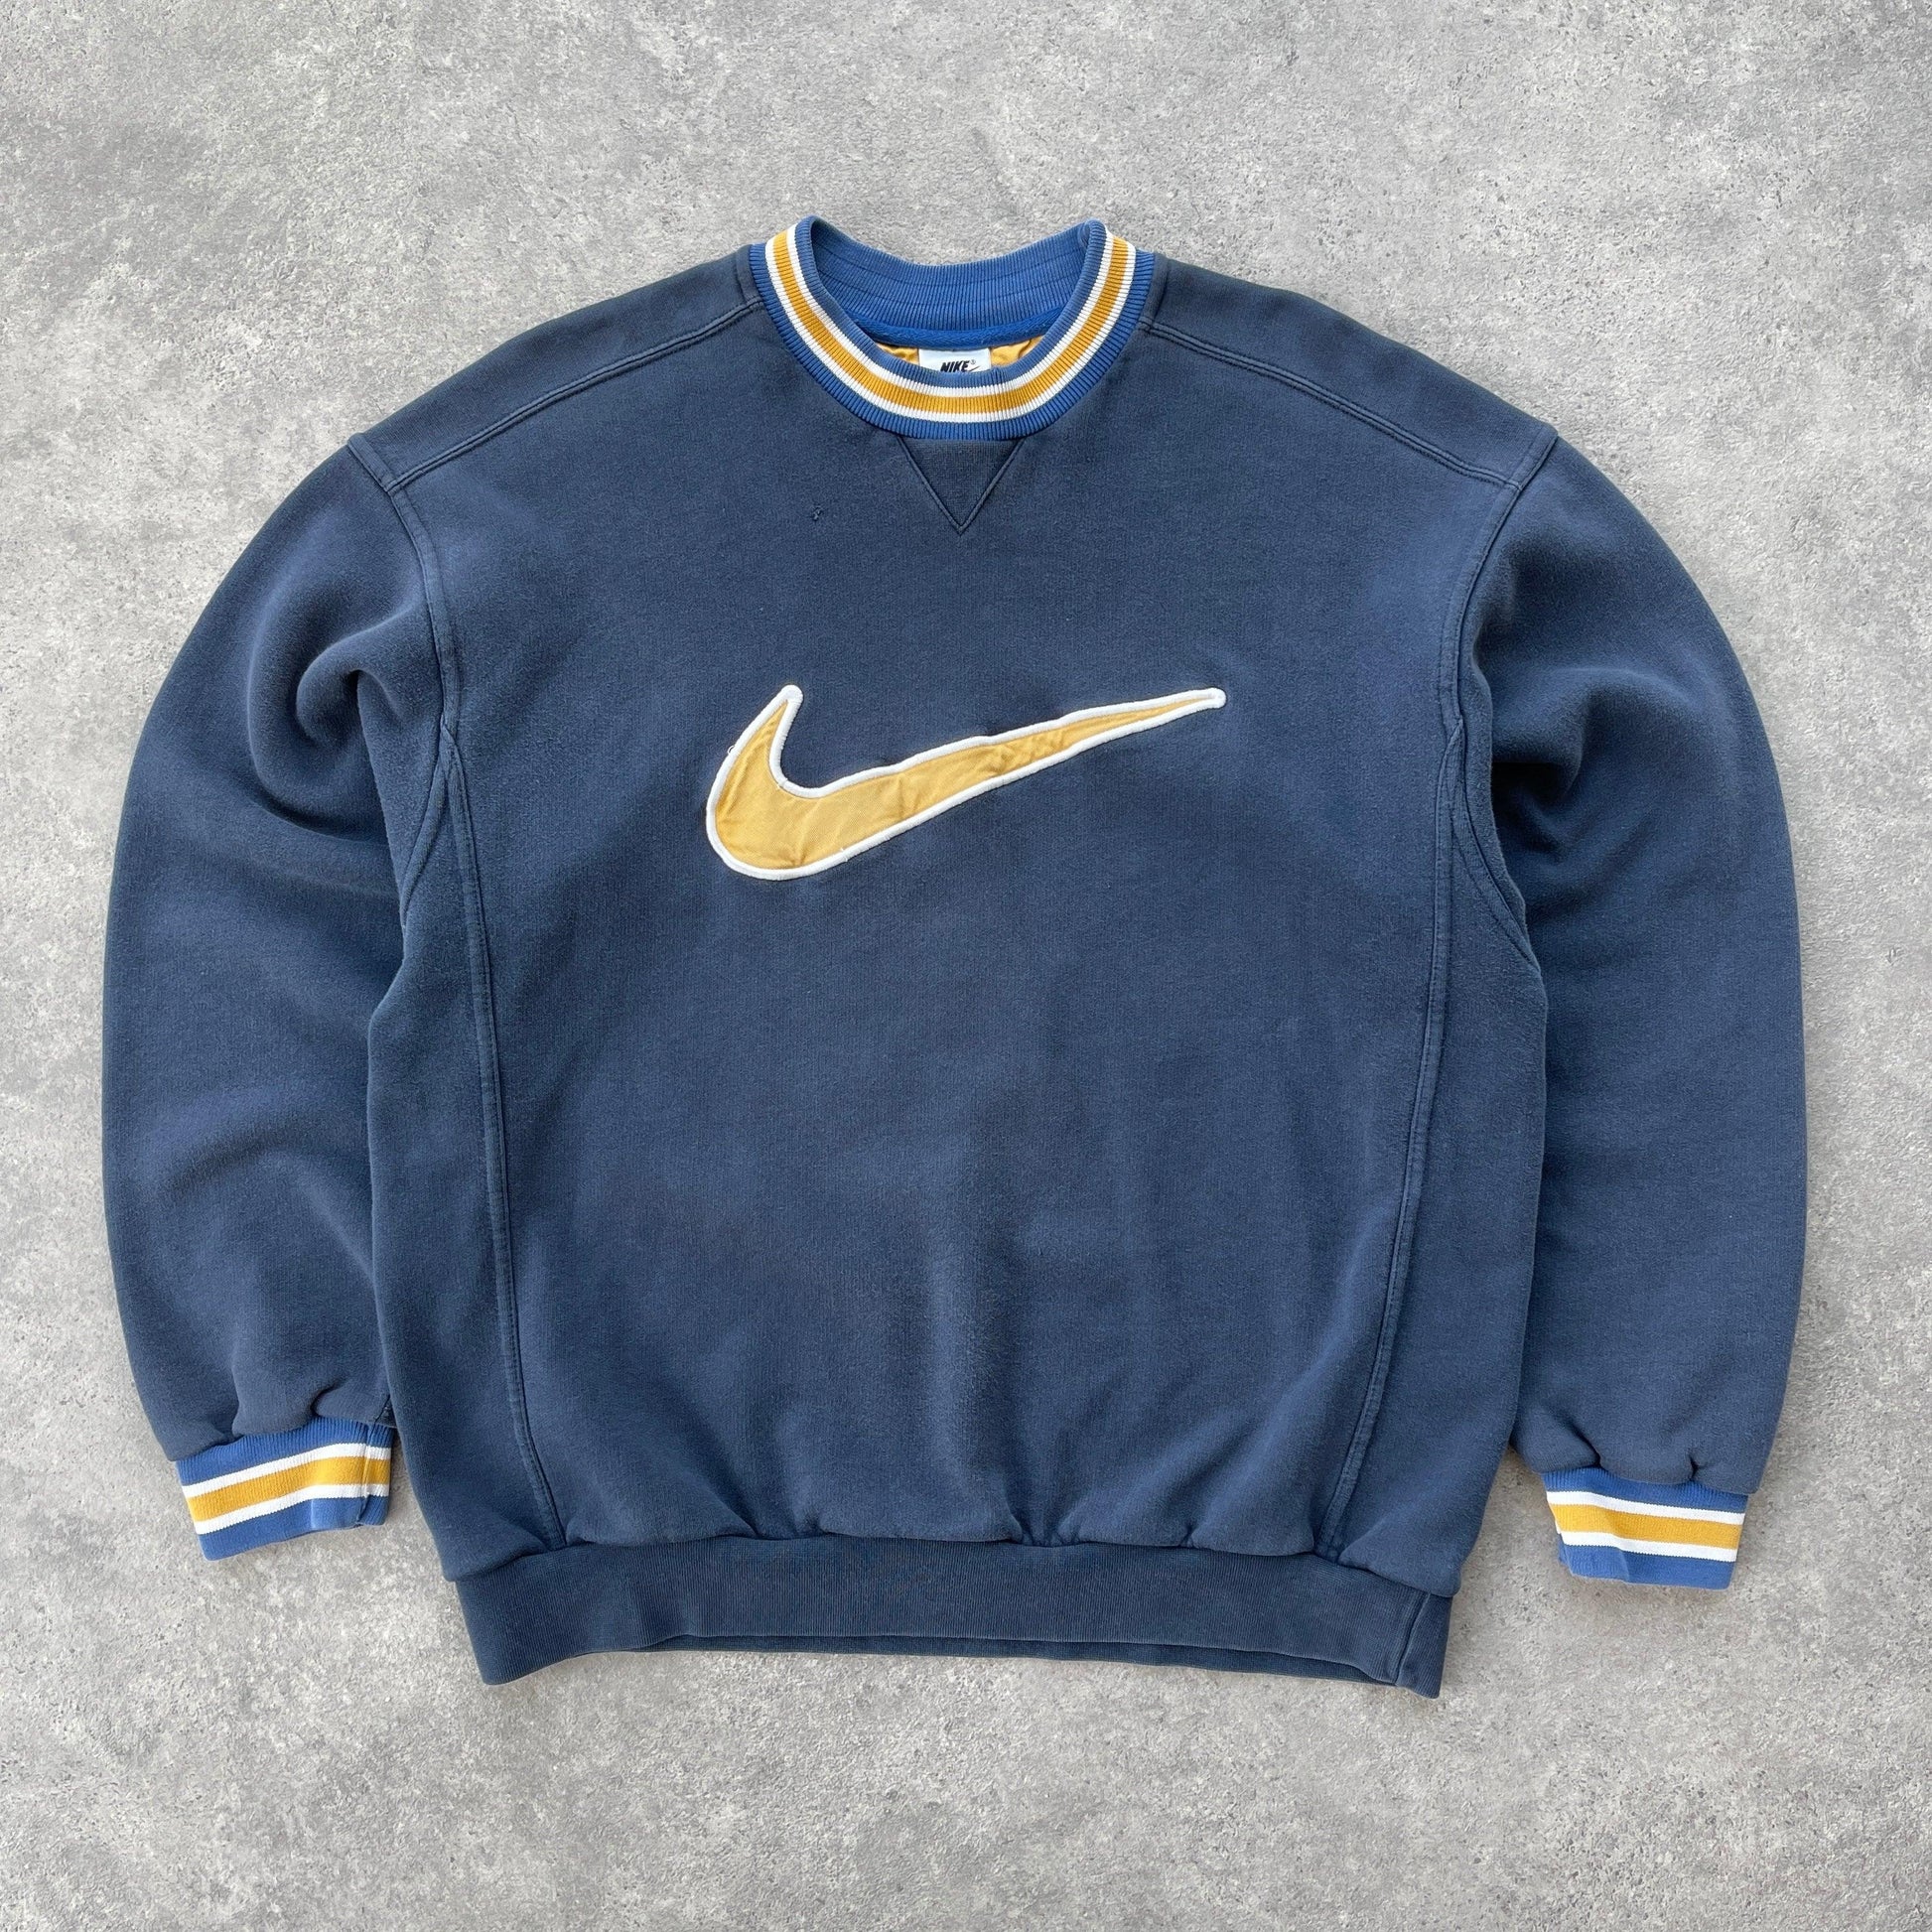 Nike RARE 1990s heavyweight embroidered sweatshirt (S) - Known Source